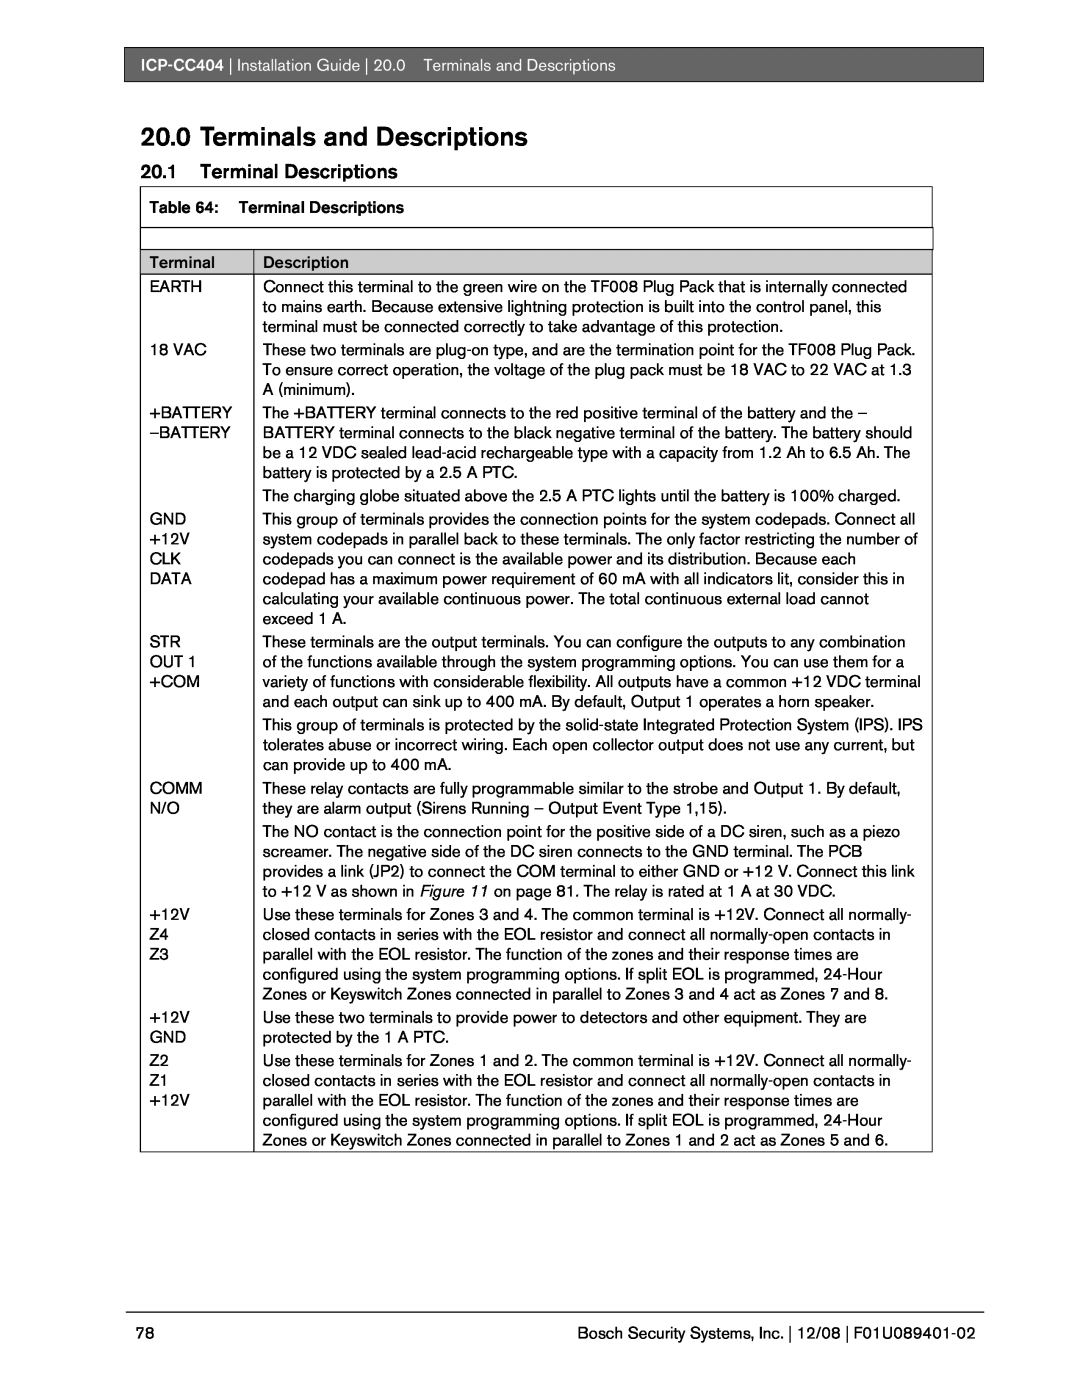 Bosch Appliances ICP-CC404 manual 20.0Terminals and Descriptions, 20.1Terminal Descriptions 